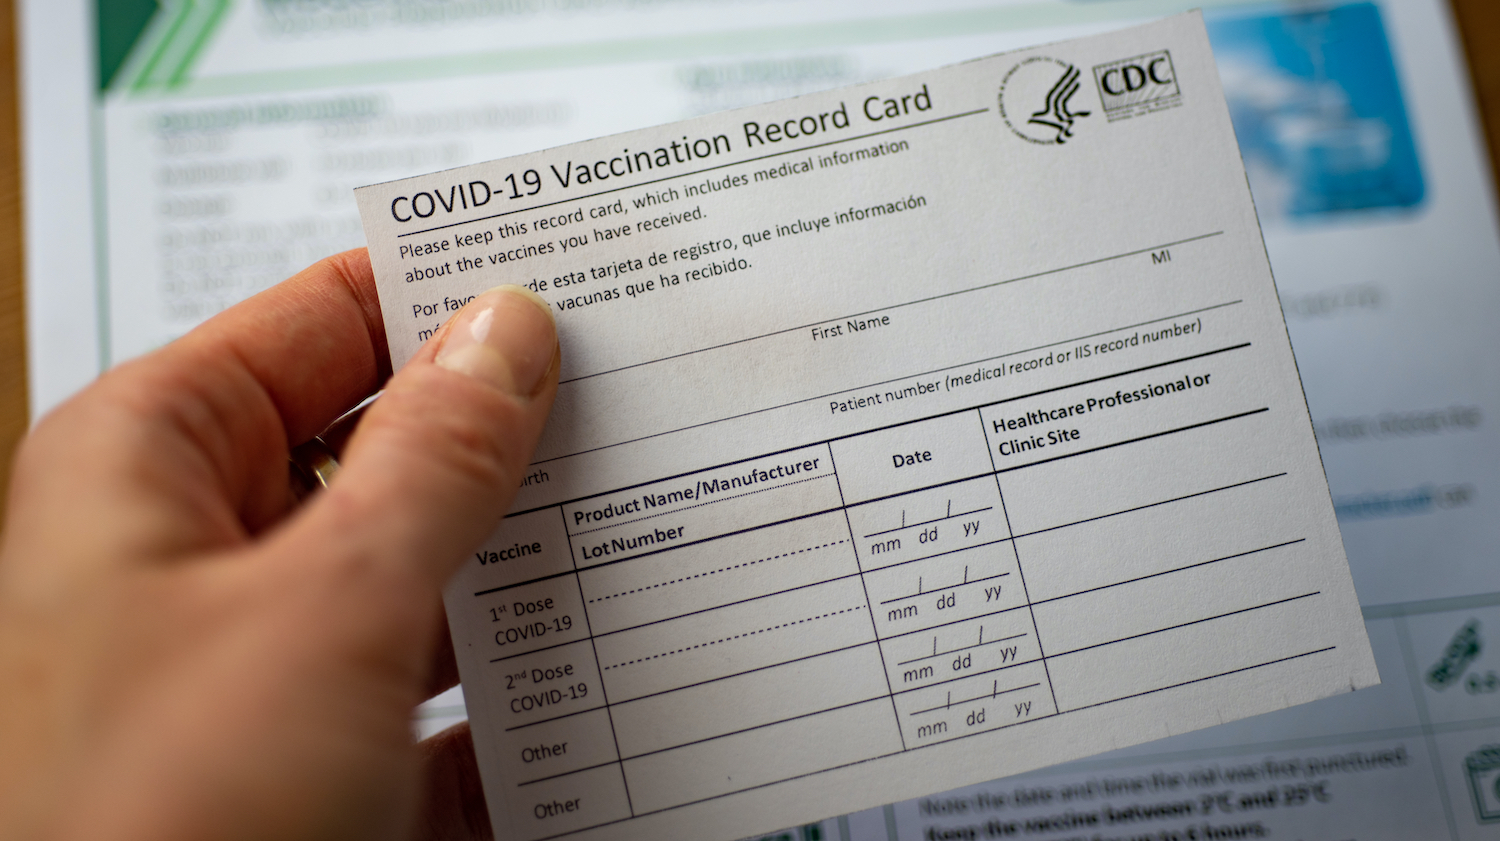 Covid 19 vaccination card.